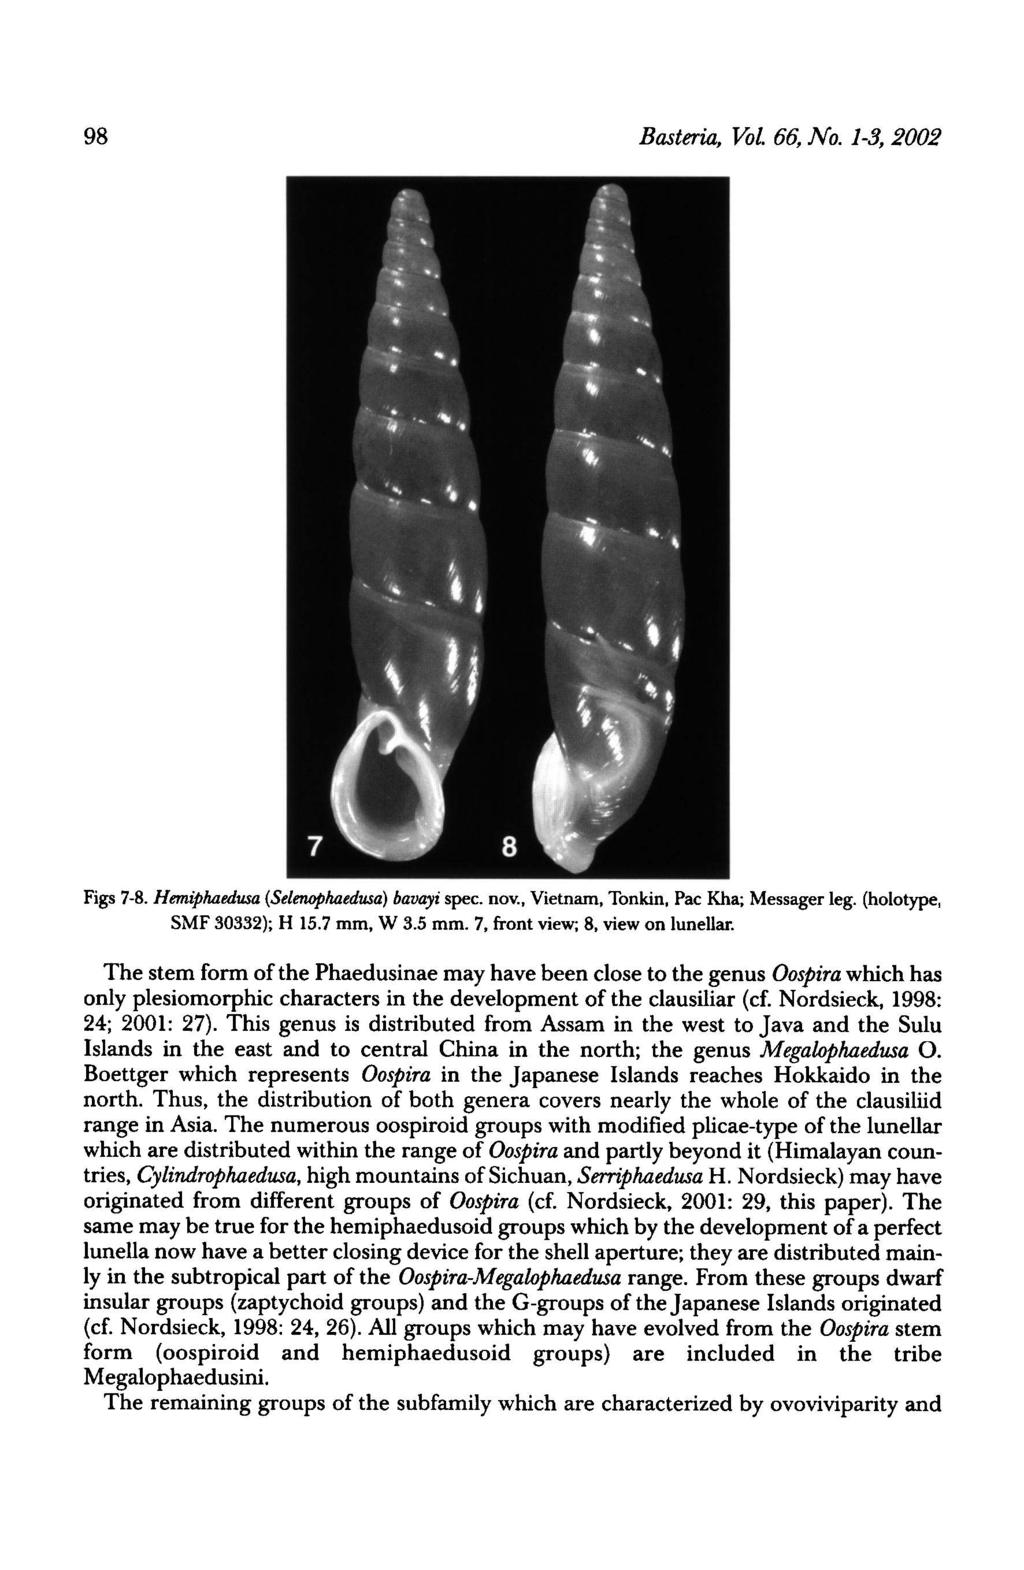 98 Basteria, Vol. 66, No. 13, 2002 Figs 78. Hemiphaedusa(Selenophaedusa) bavayi nov., spec. Vietnam, Tonkin, Pac Kha; Messager leg. (holotype, SMF 30332); H 15.7 W mm, 3.5 mm.